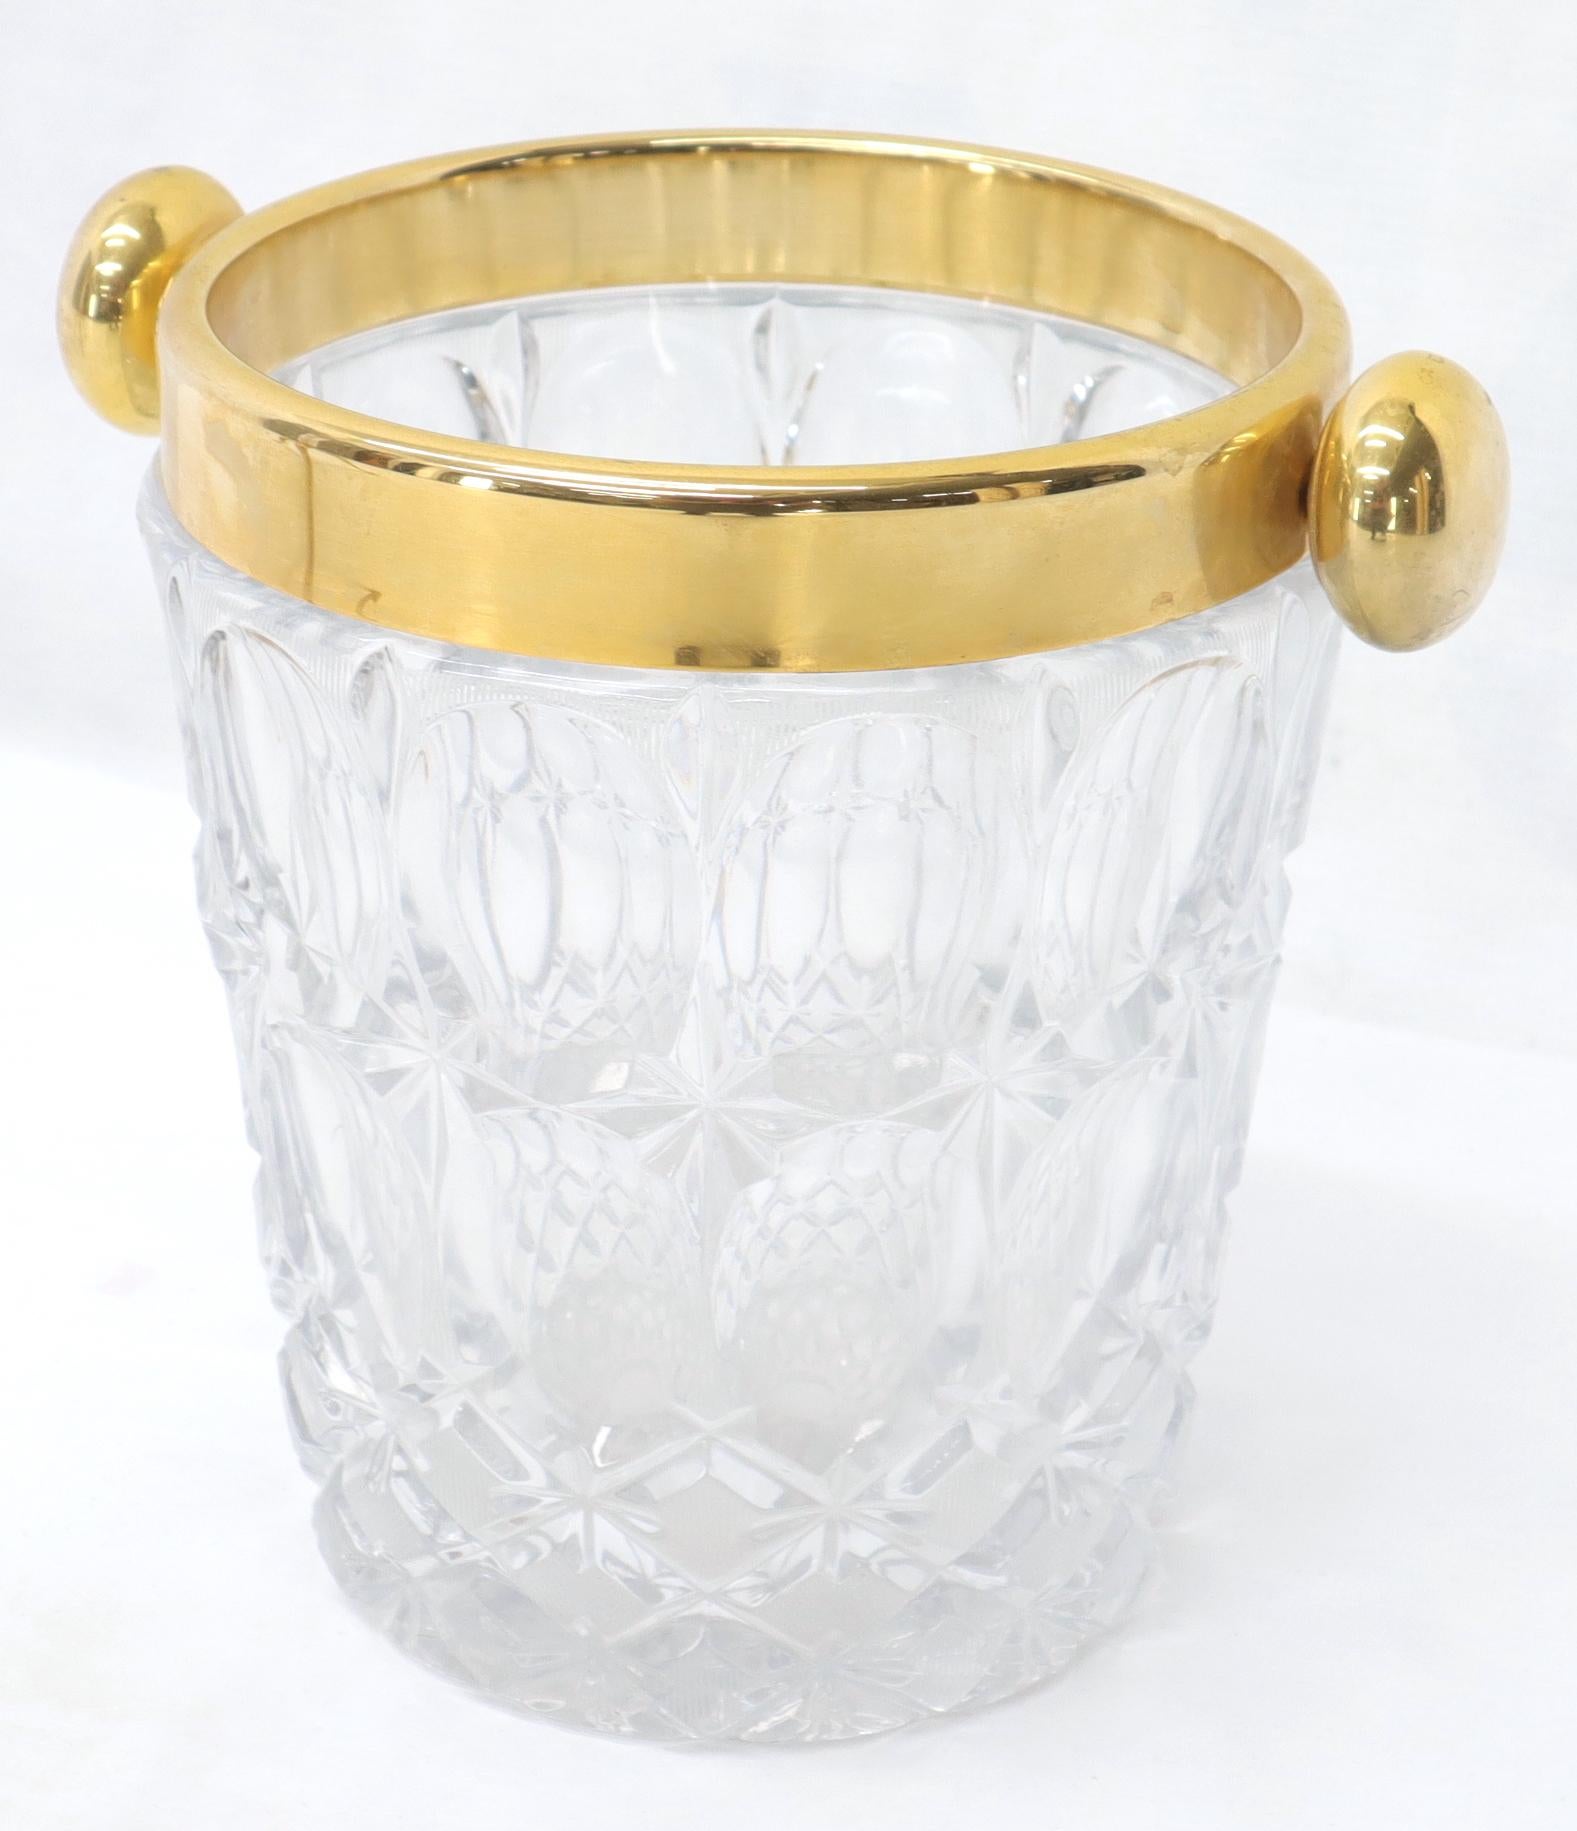 Italian 24-Karat Gold-Plated Cut Glass Champagne Stand Cooler Serving Bucket 9